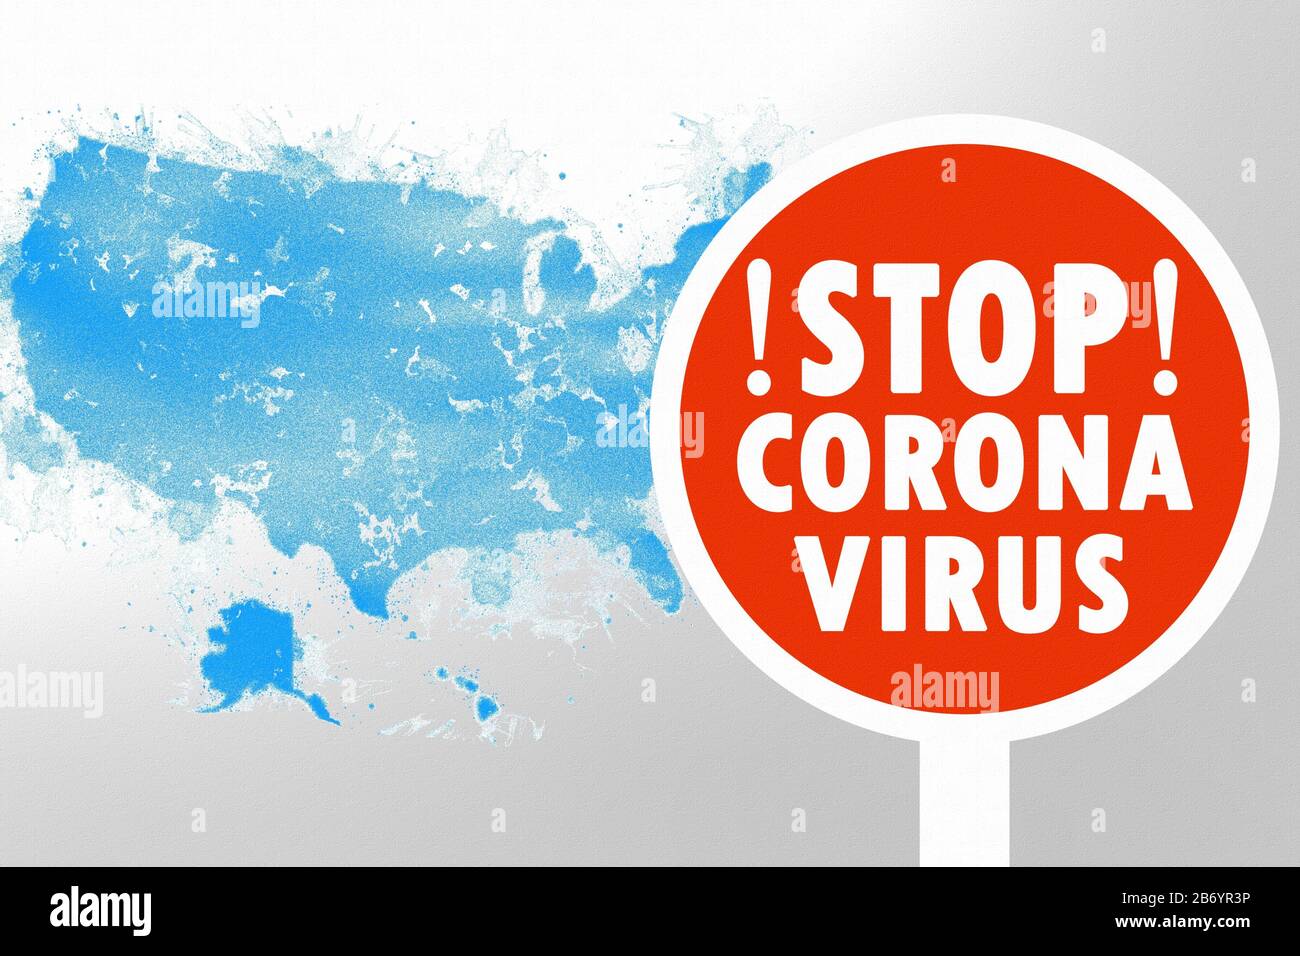 Coronavirus (COVID-19) health alert in USA. Covid 19 continues to spread around the globe - World Health Organization declares coronavirus a pandemic Stock Photo